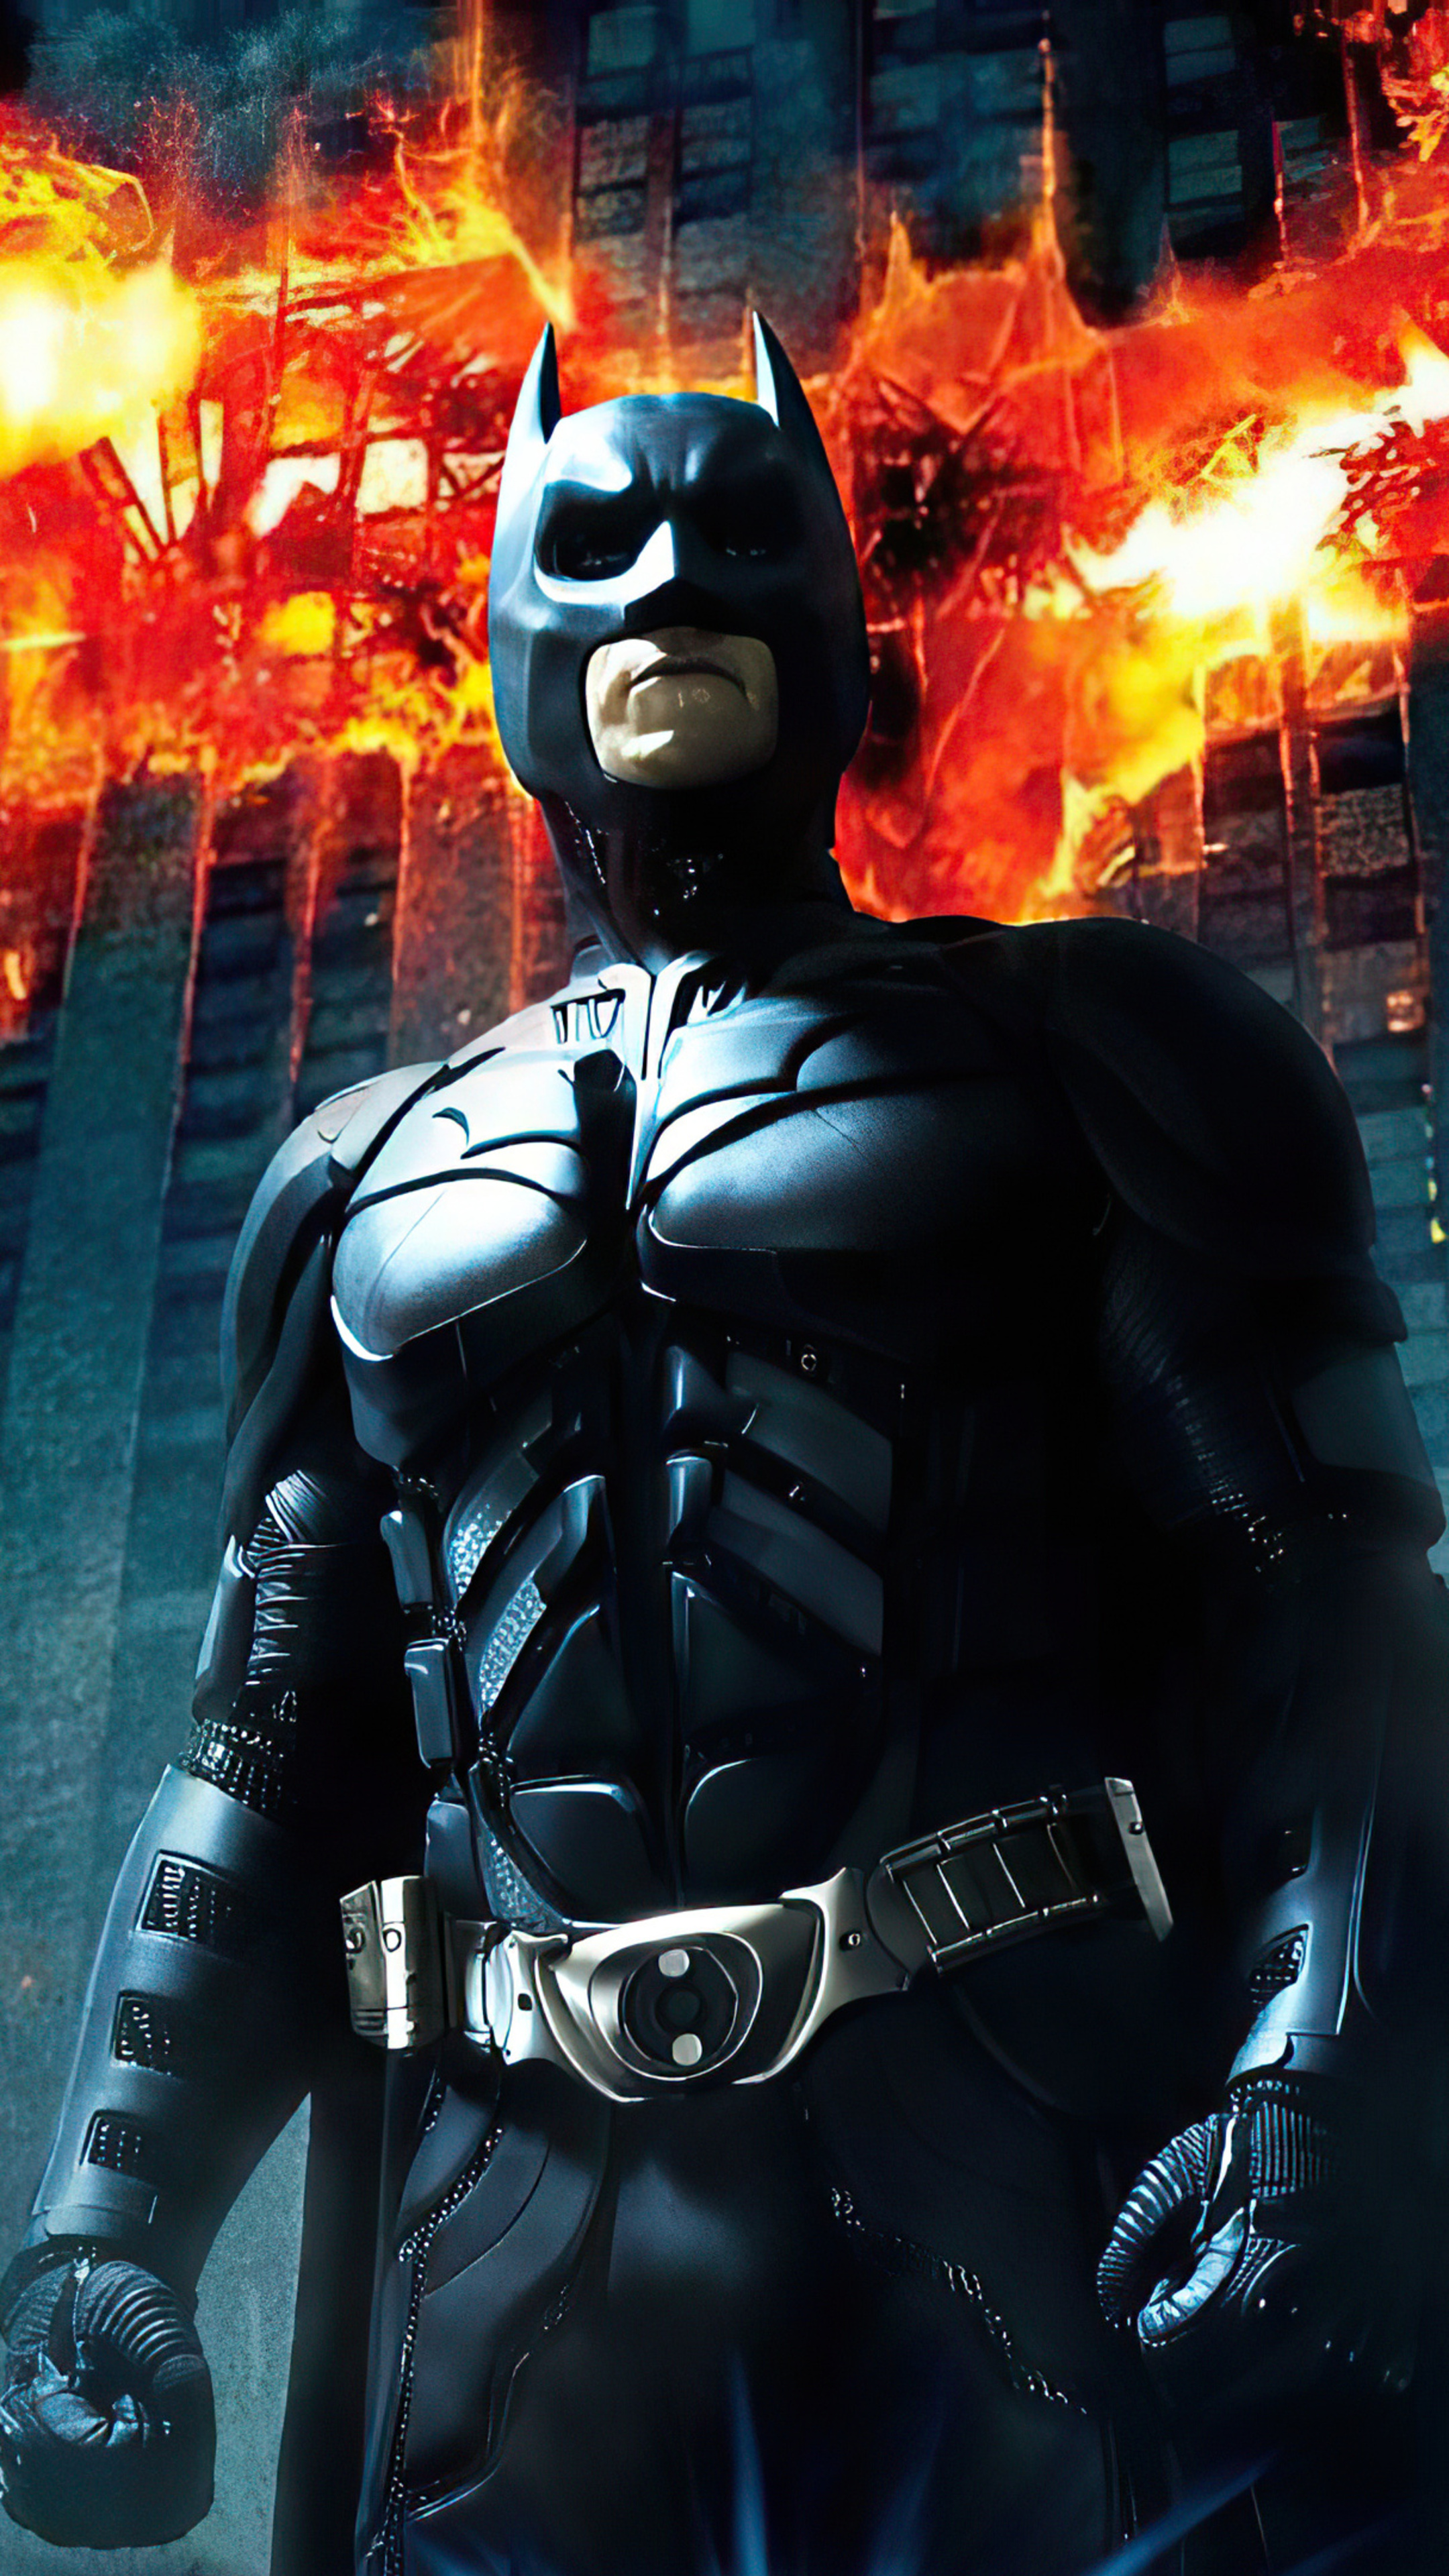 Batman 2020 Dark Knight Sony Xperia X, XZ, Z5 Premium HD 4k Wallpaper, Image, Background, Photo and Picture